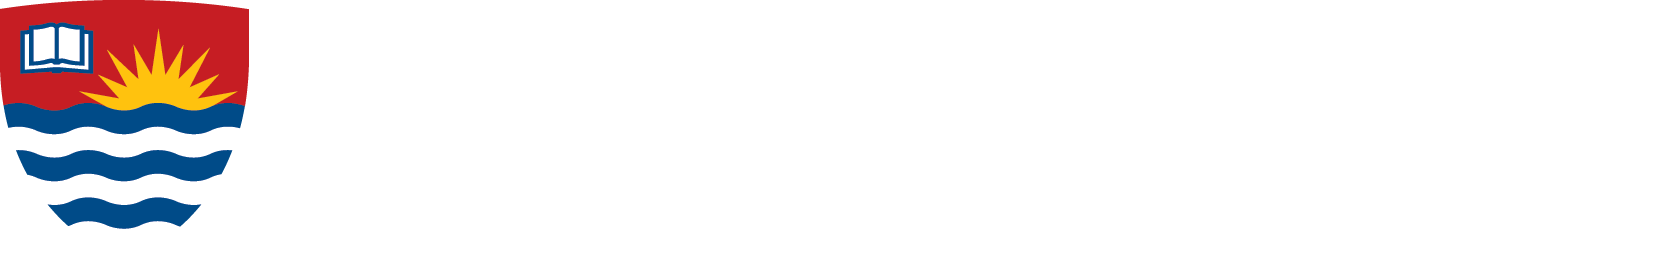 Graduate Studies Logo